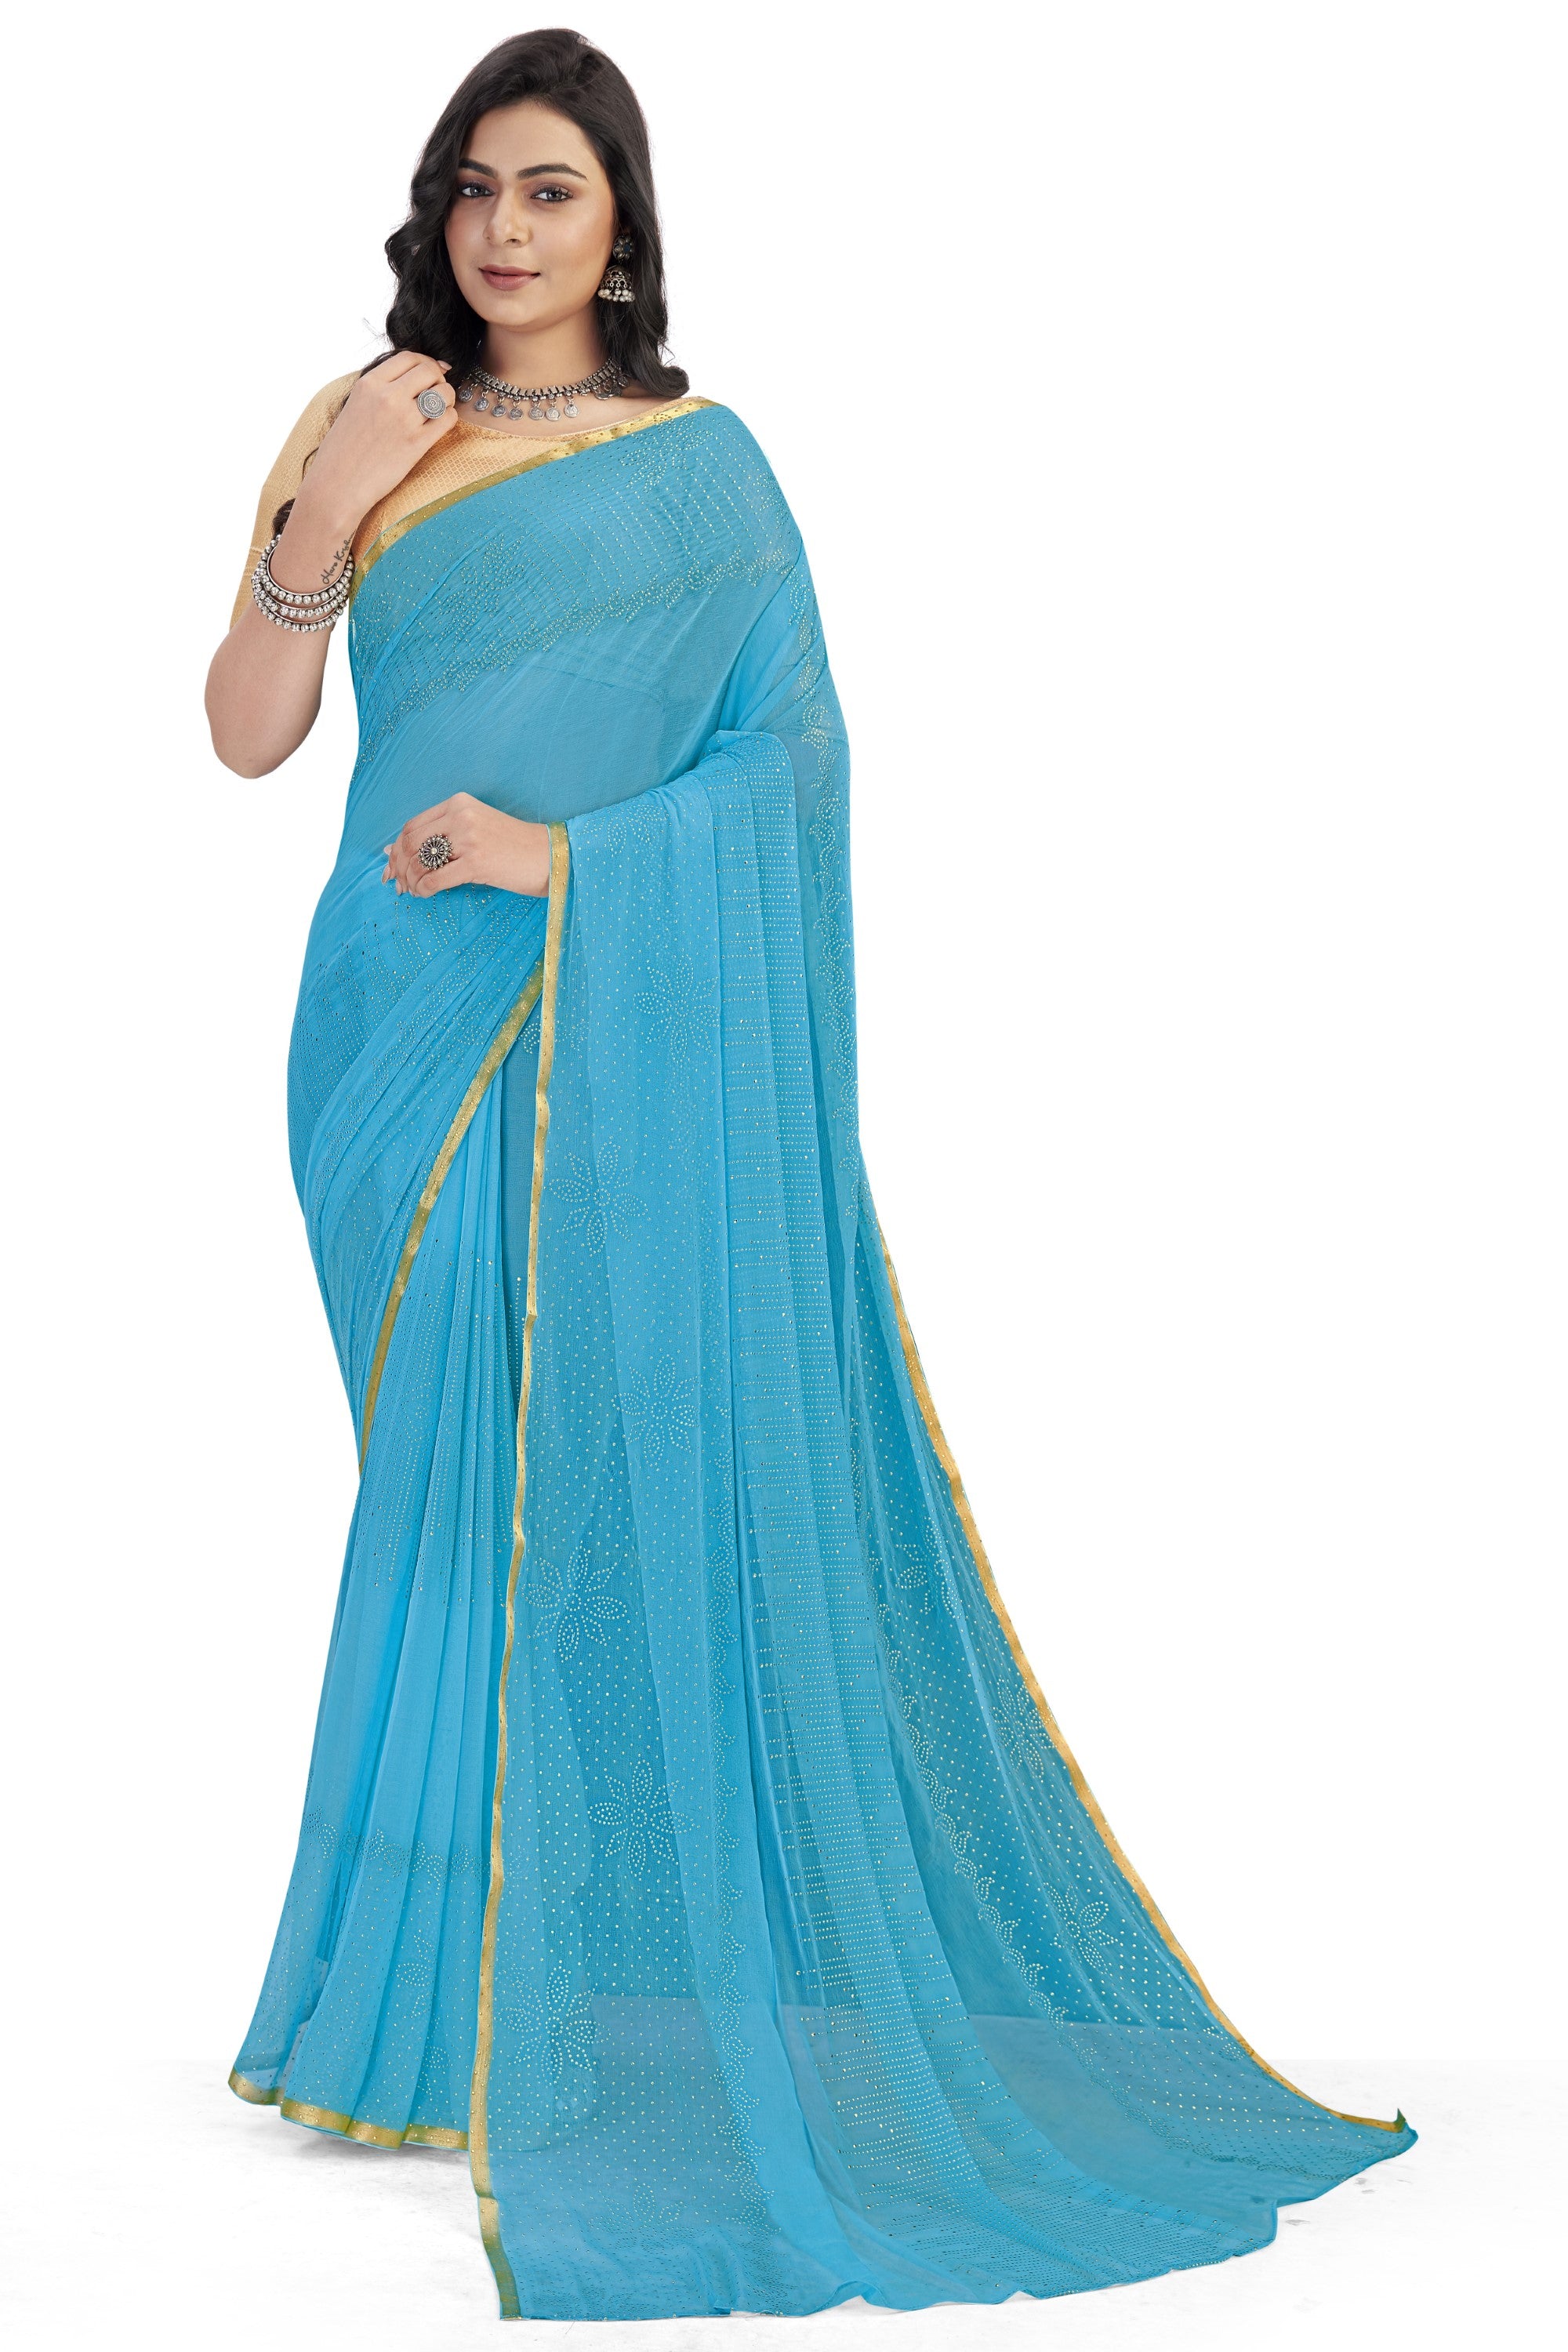 Women's Bandhani Daily Wear Chiffon Sari With Blouse Piece (Sky Blue) - NIMIDHYA